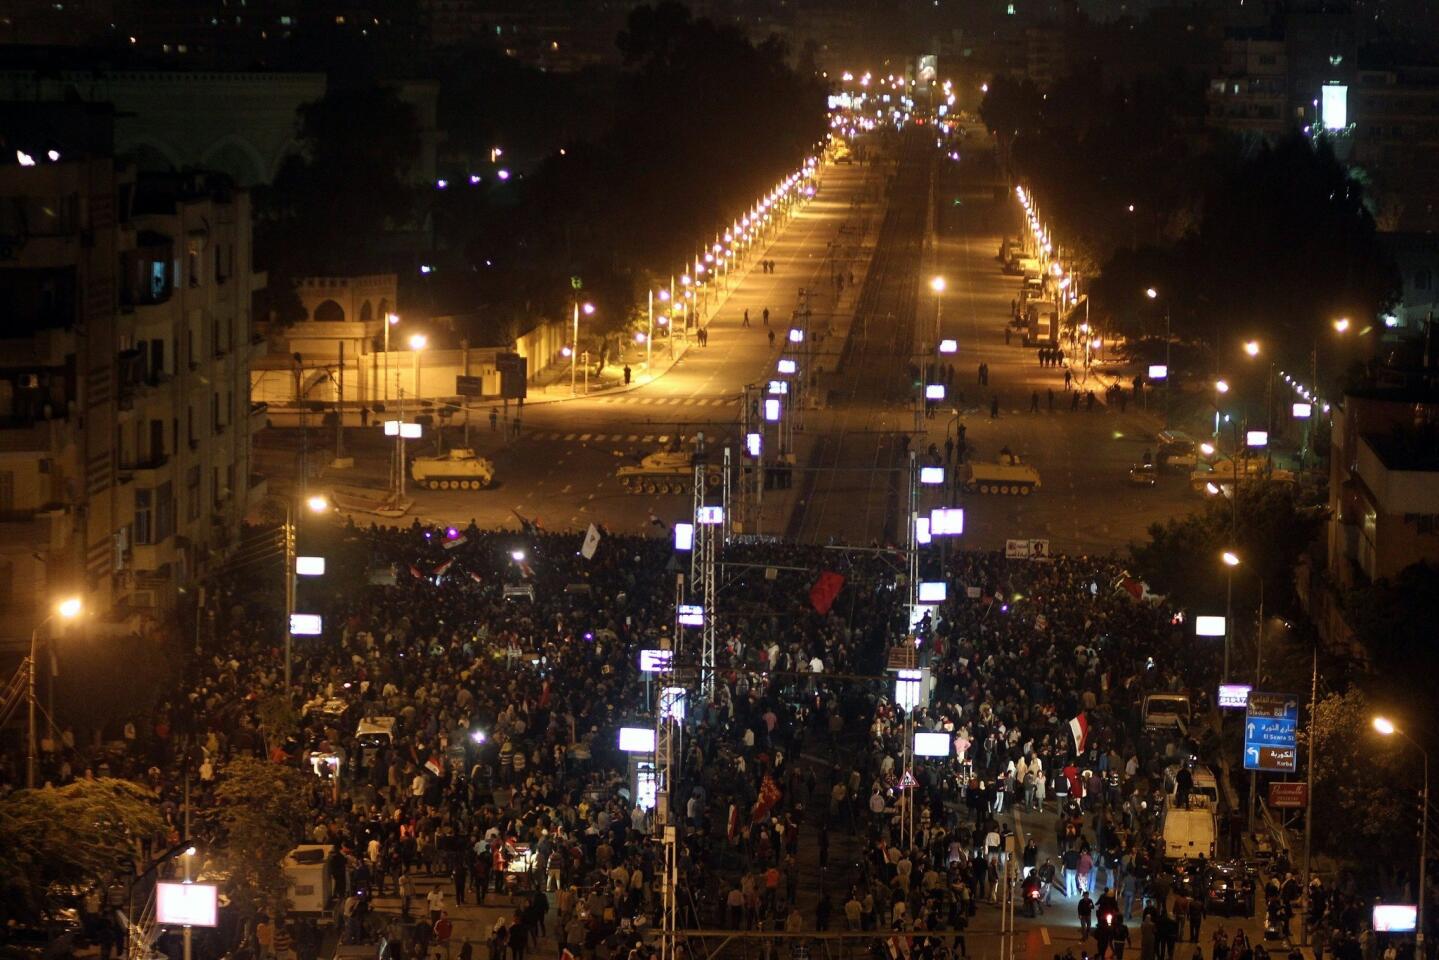 Cairo protest